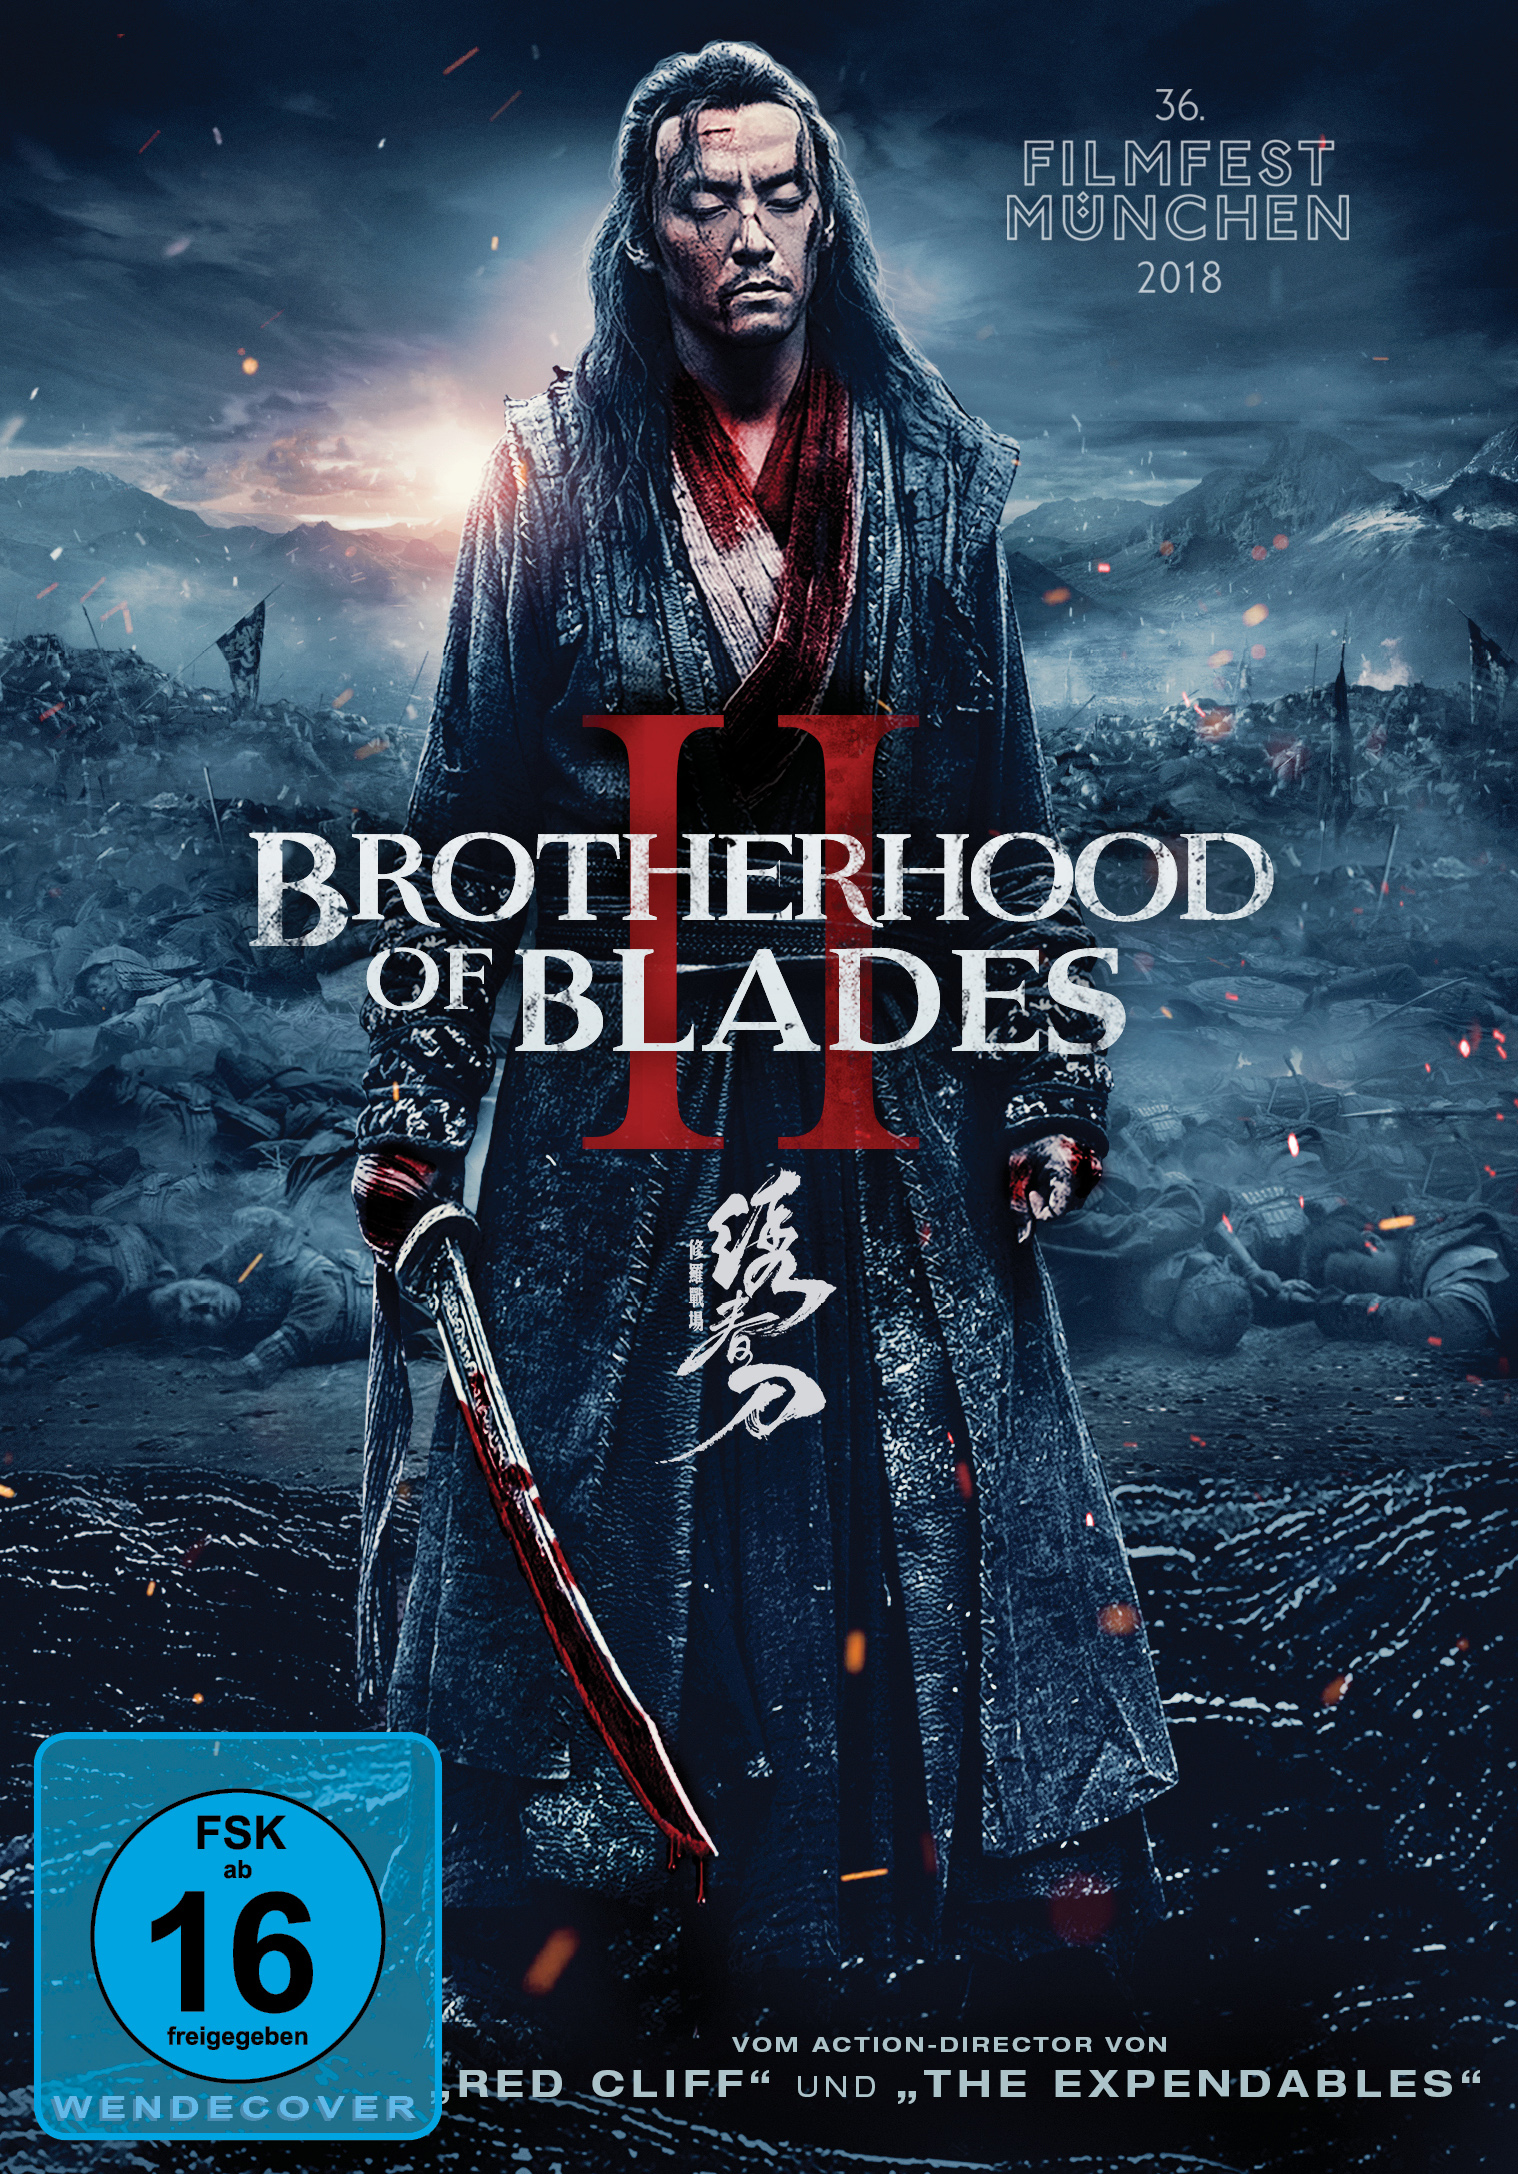 2 Blades DVD Of Brotherhood